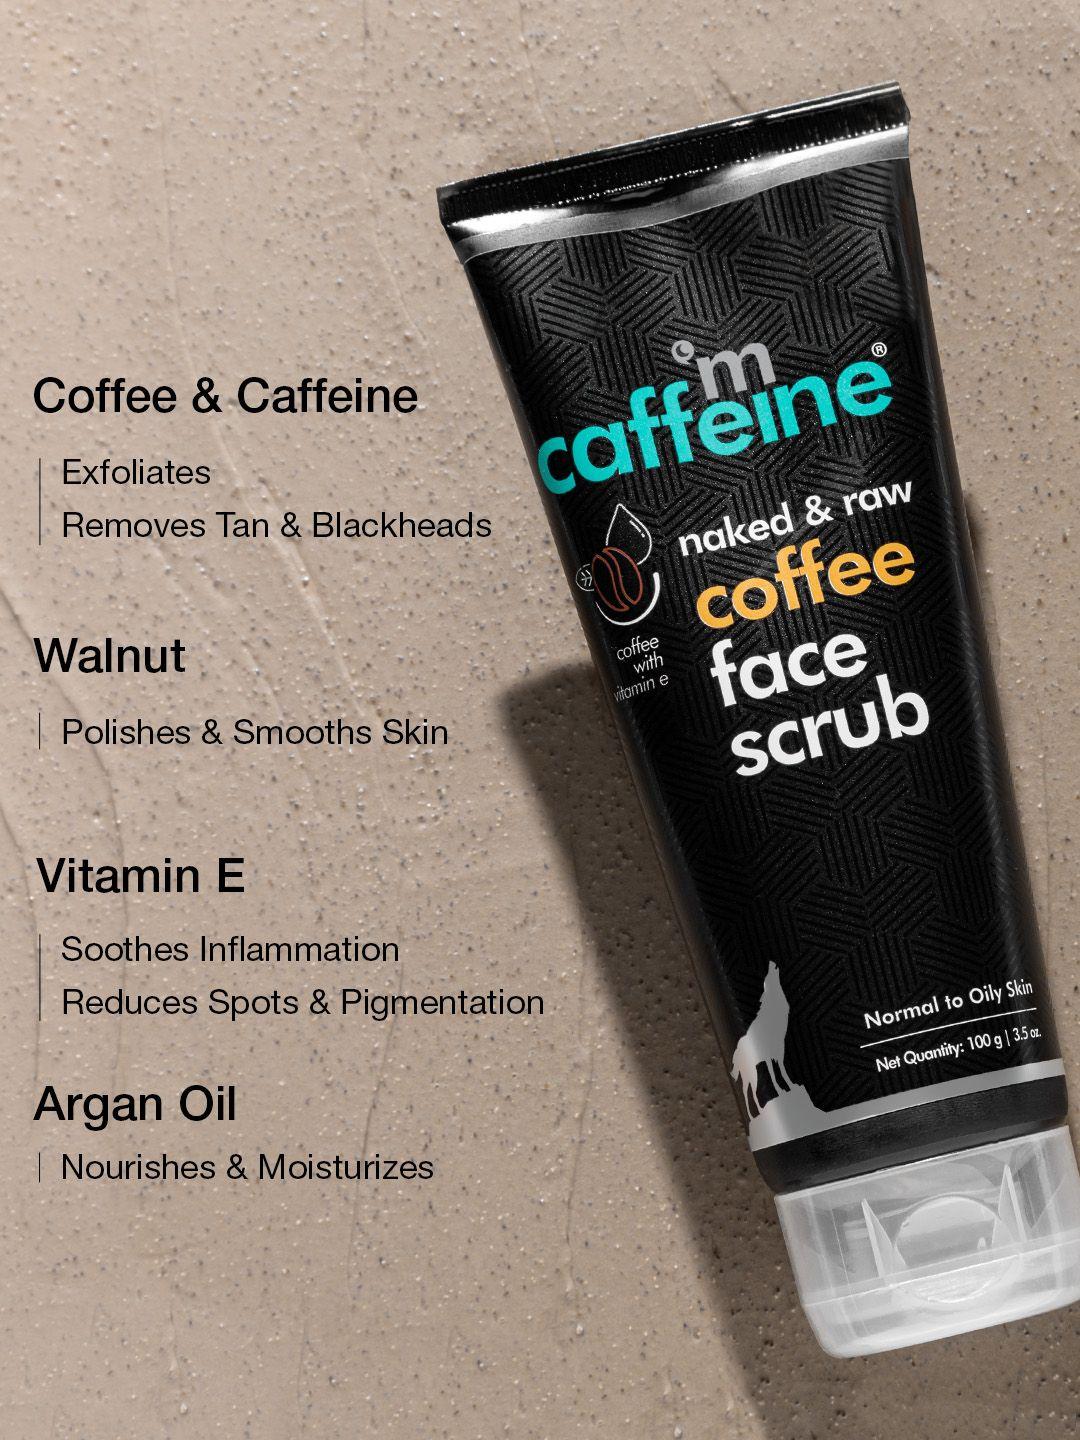 mcaffeine coffee exfoliating face scrub for fresh & glowing skin- removes tan & blackheads